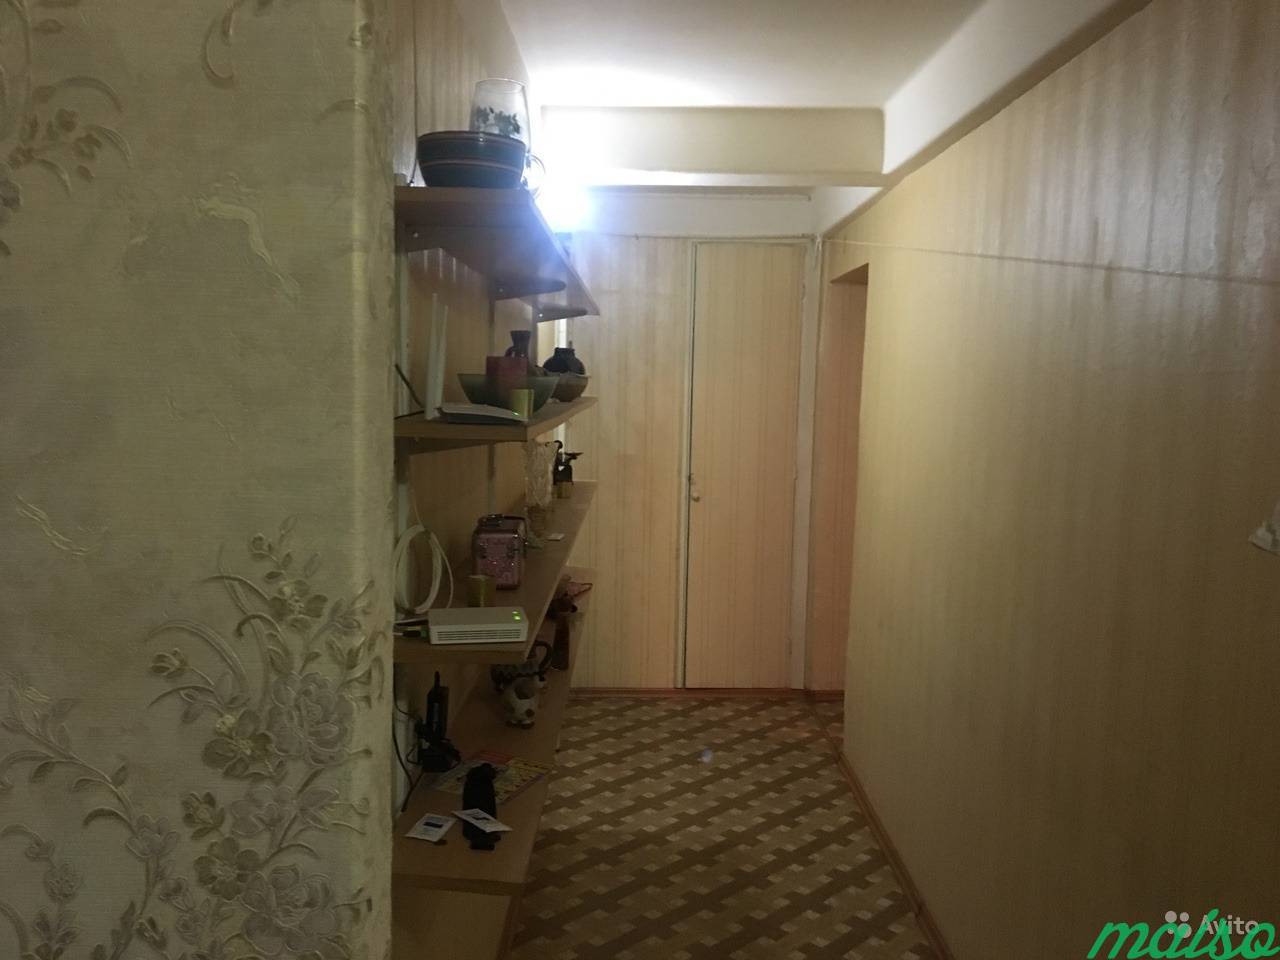 Комната 18 м² в 3-к, 1/5 эт. в Санкт-Петербурге. Фото 9